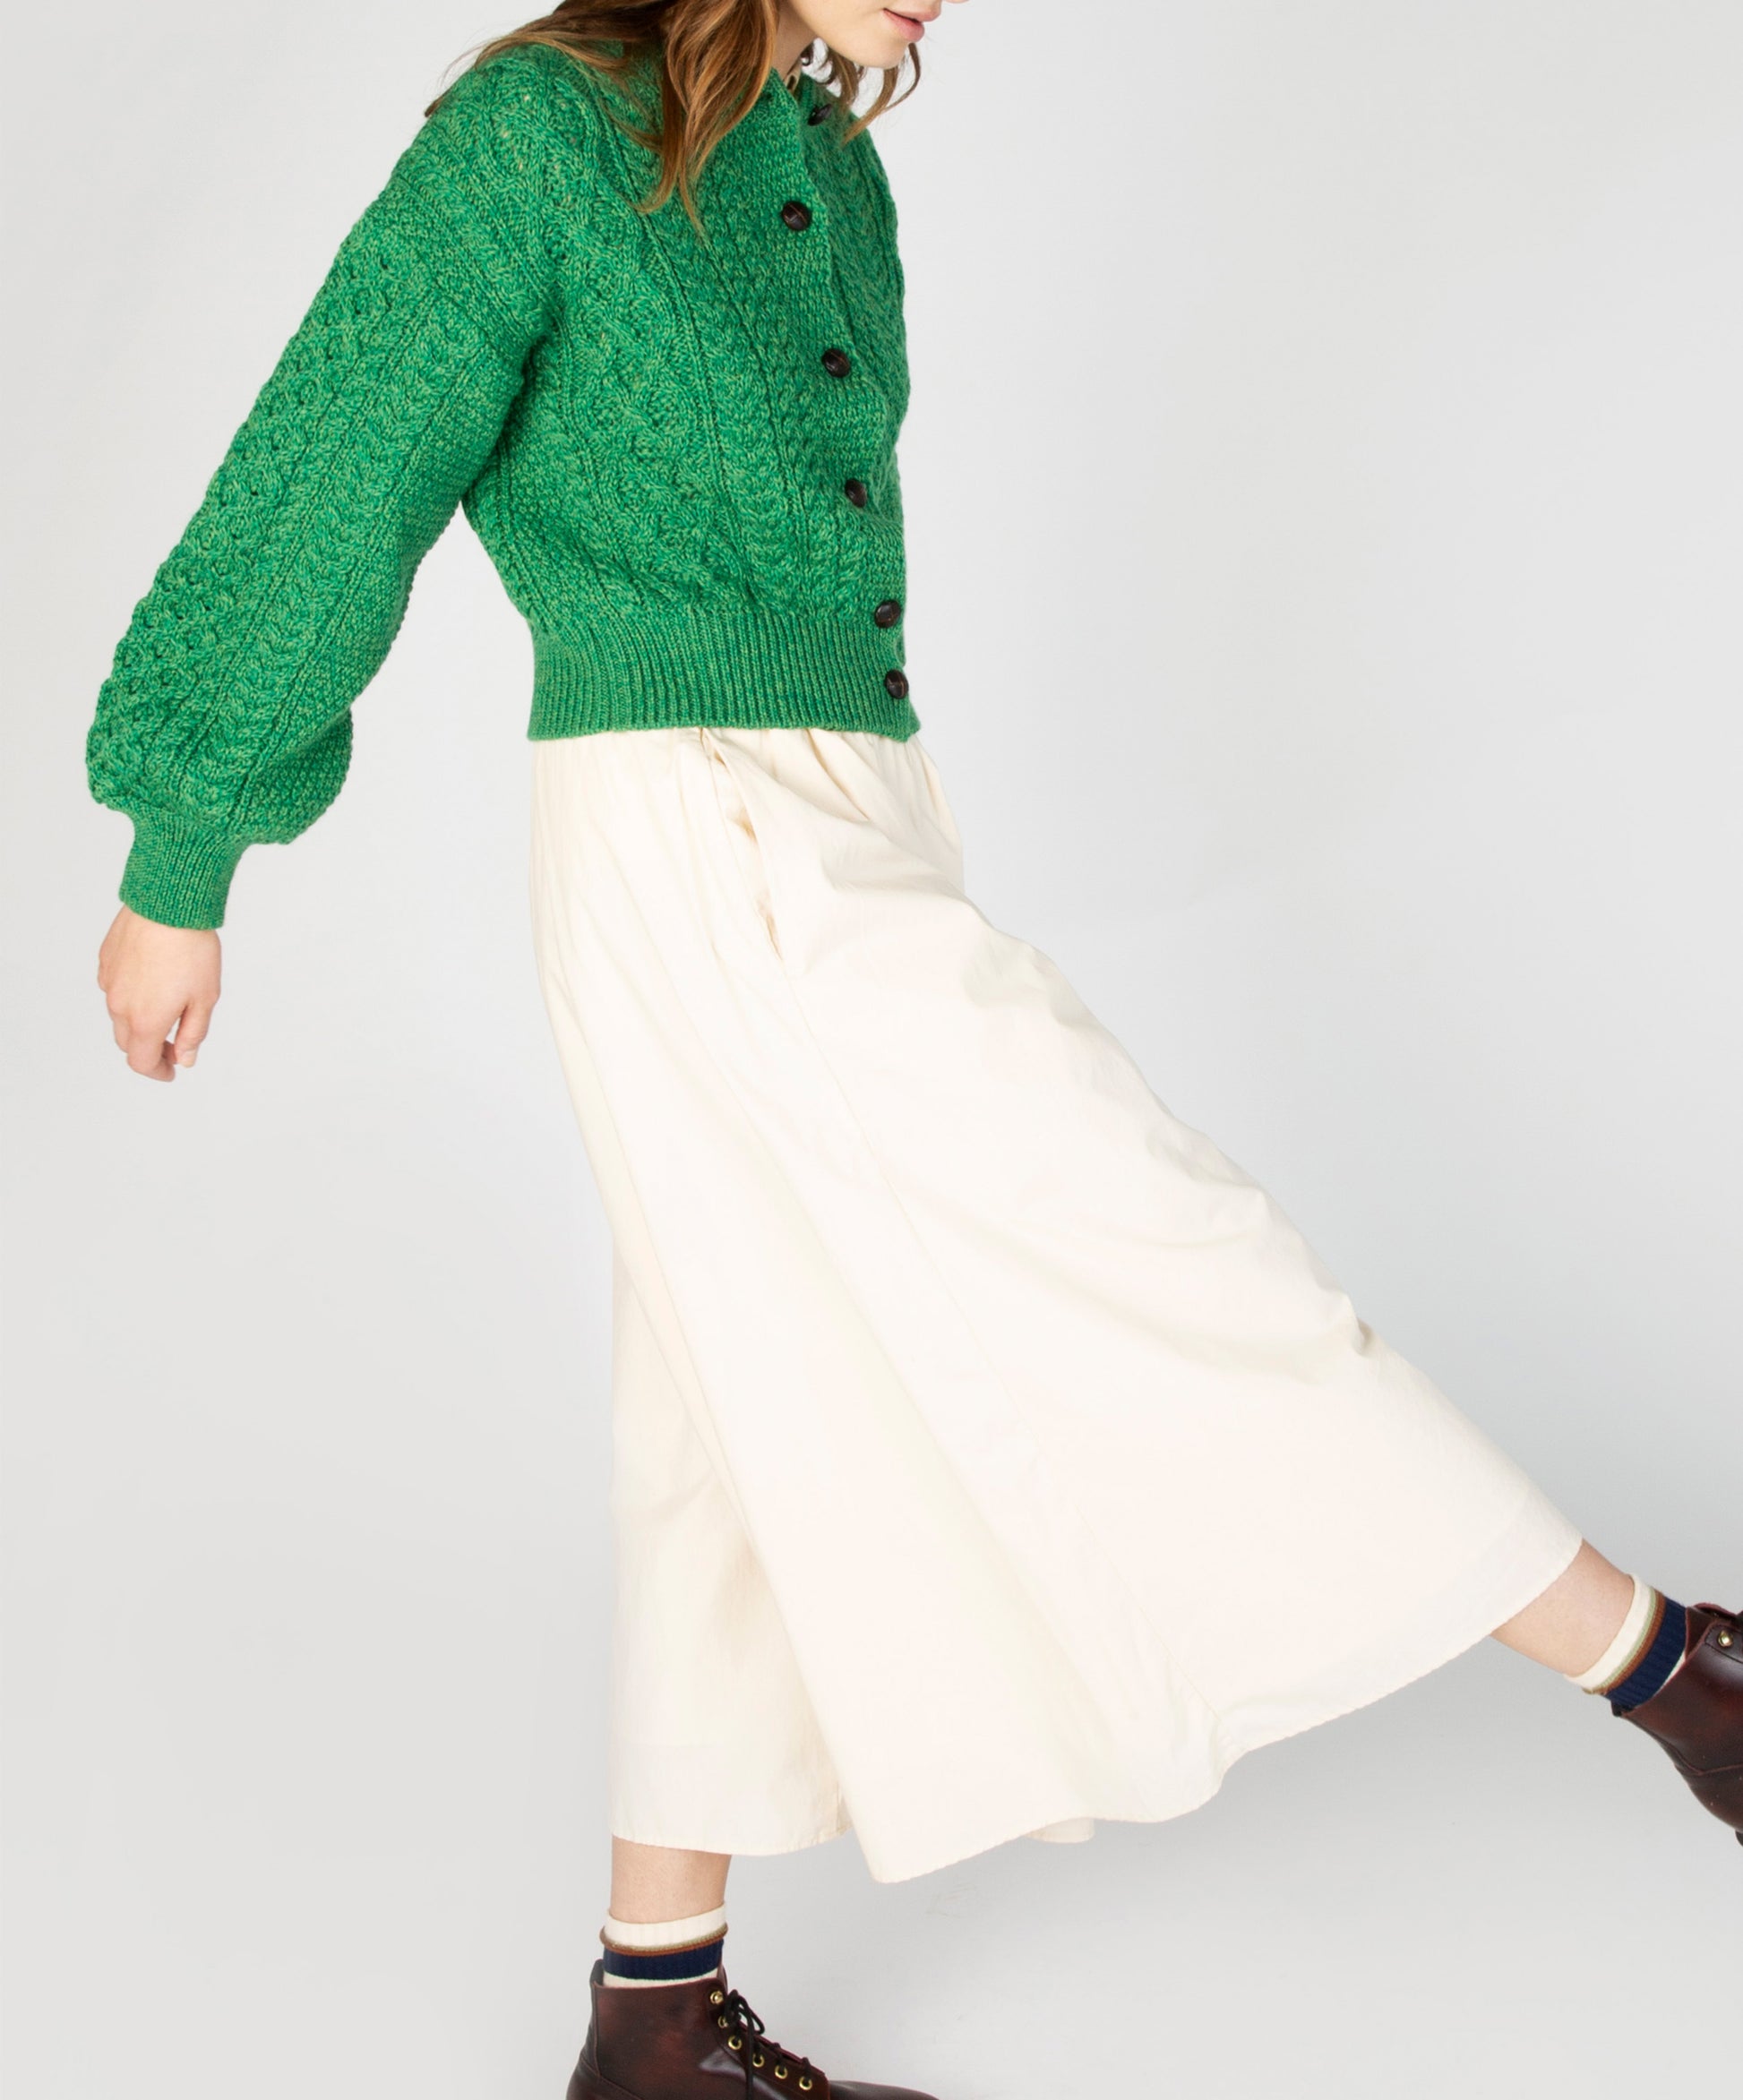 IrelandsEye Knitwear Clover Cropped Aran Cardigan Green Marl